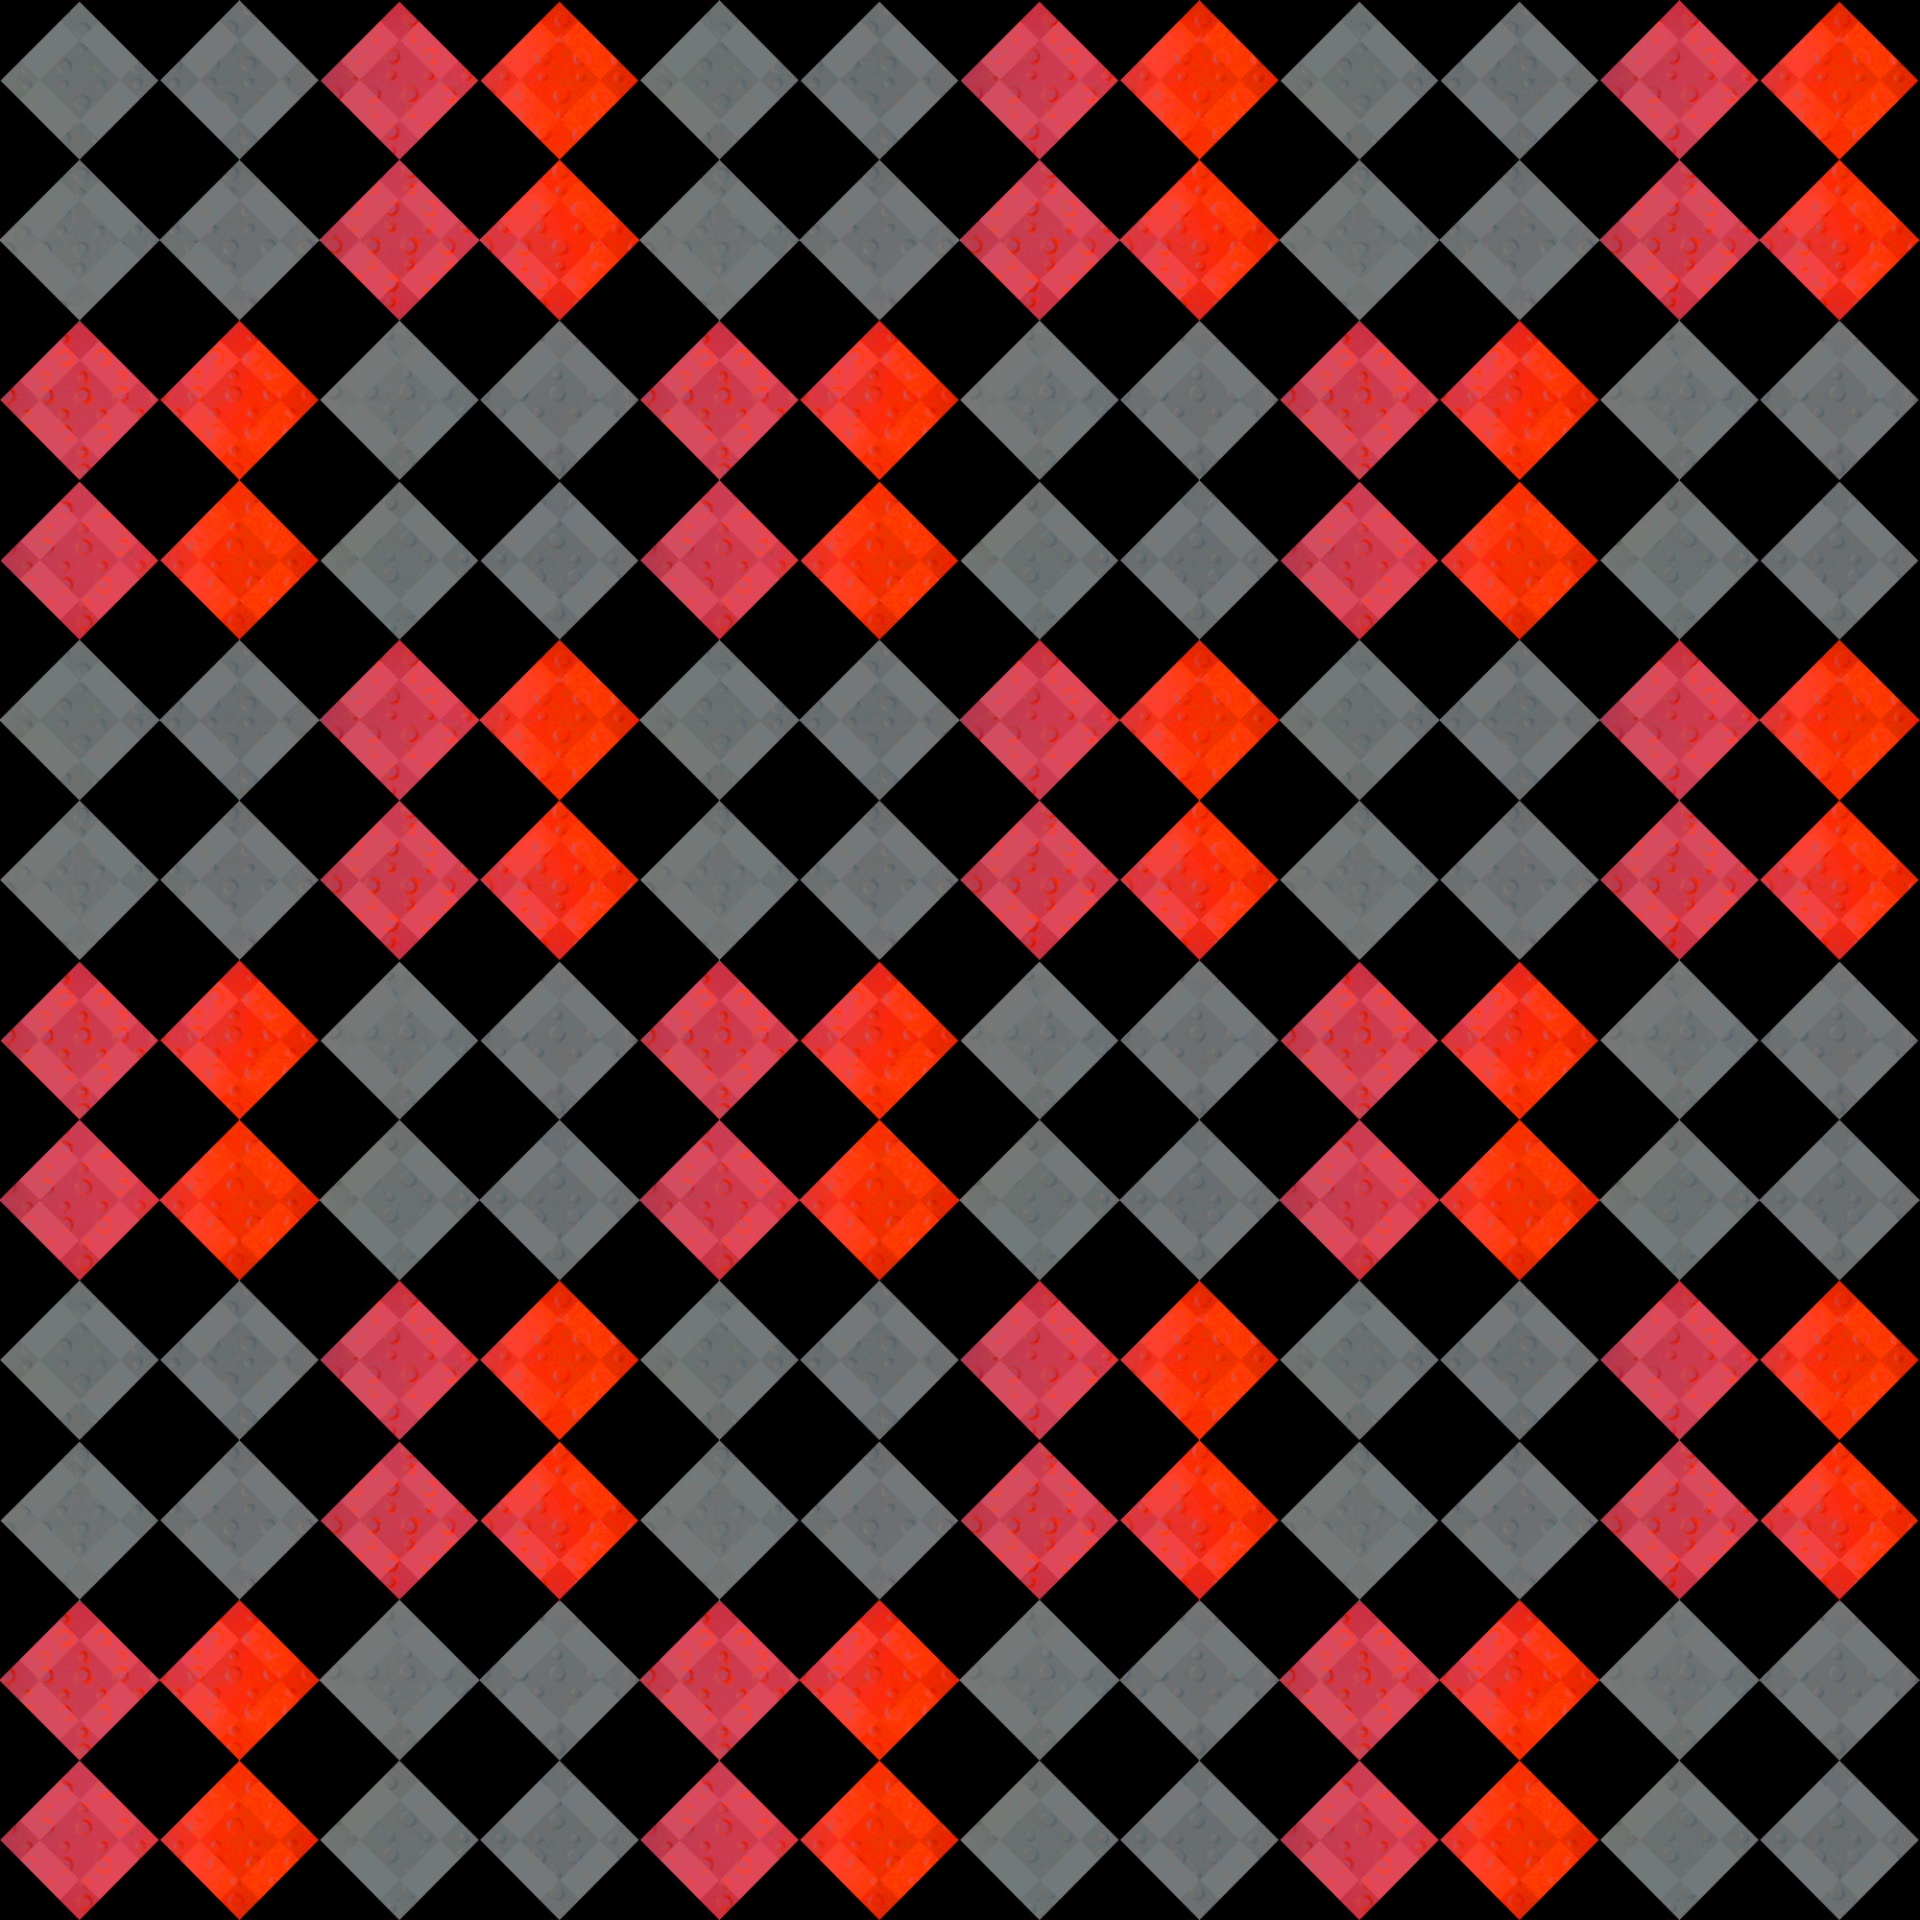 cubes pattern wallpaper free photo